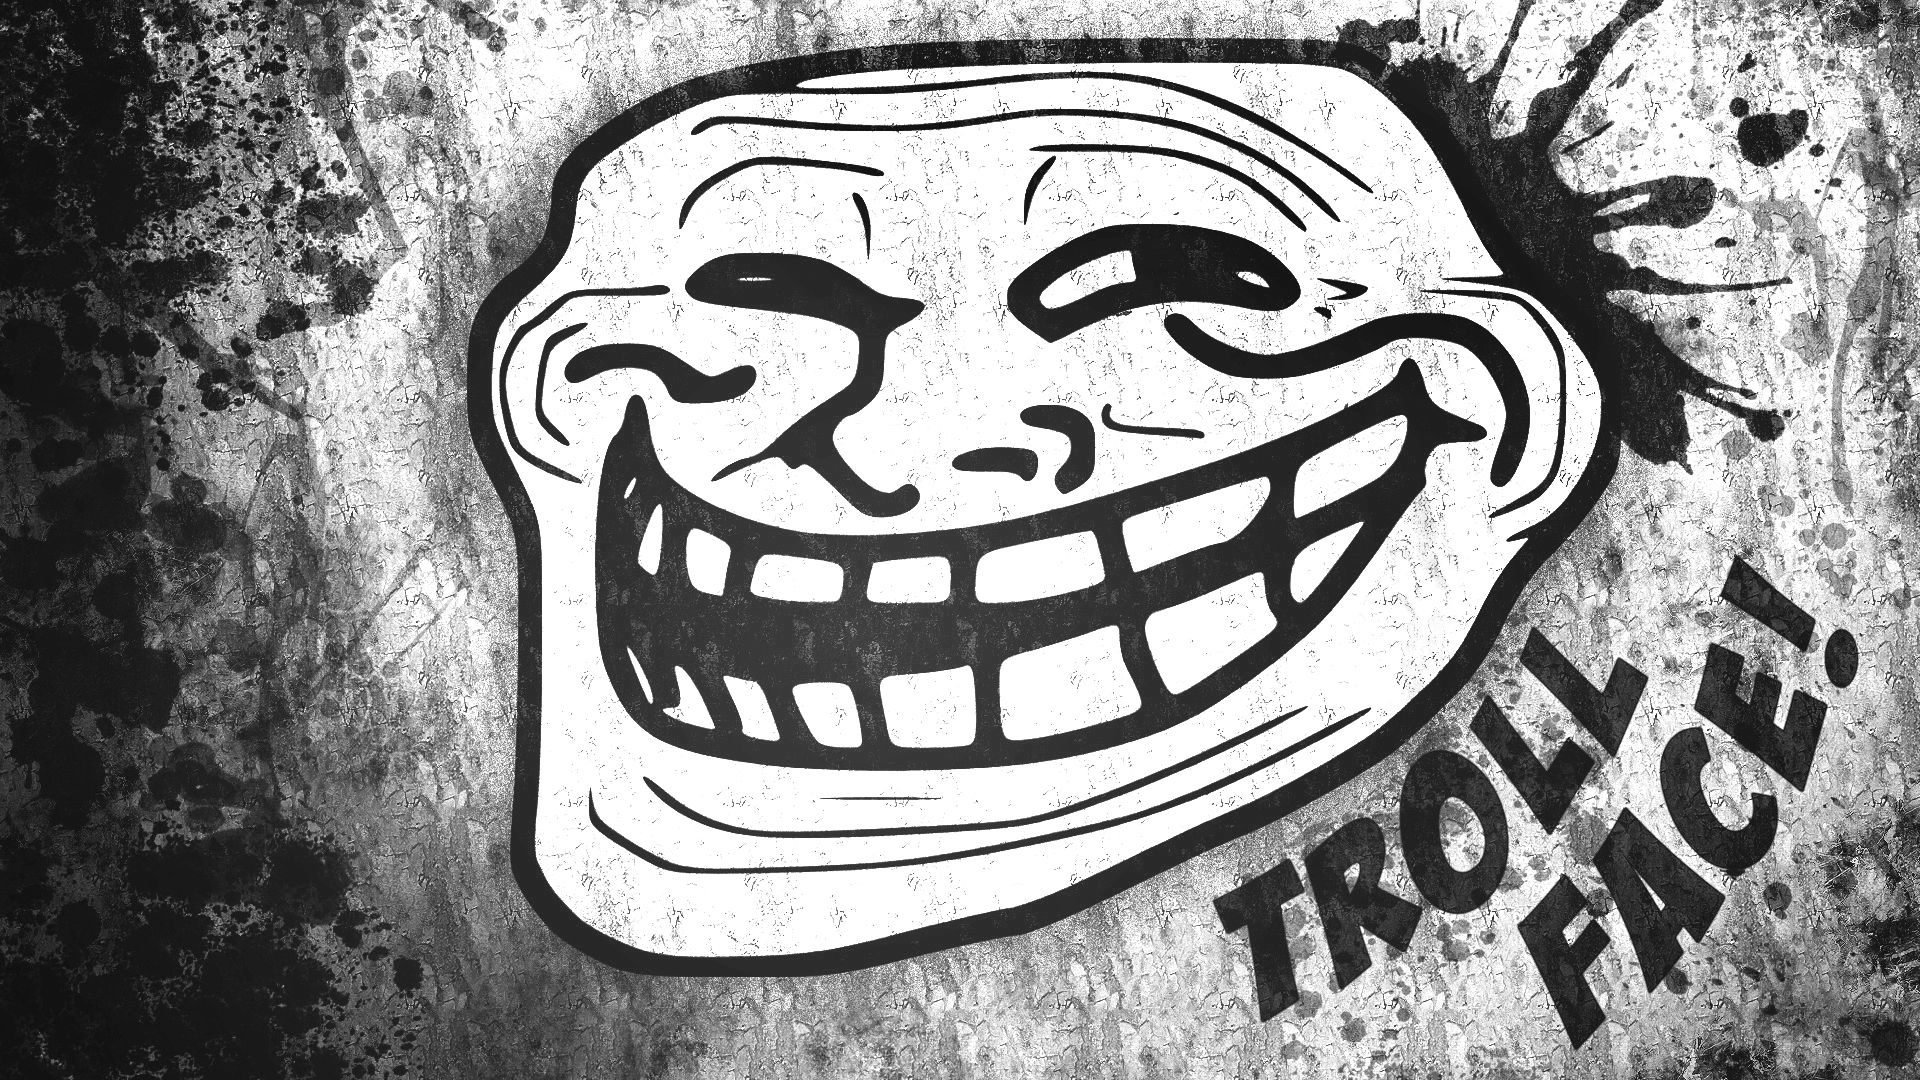 Download Troll Face Wallpaper 7648 1920x1080 px High Resolution ...